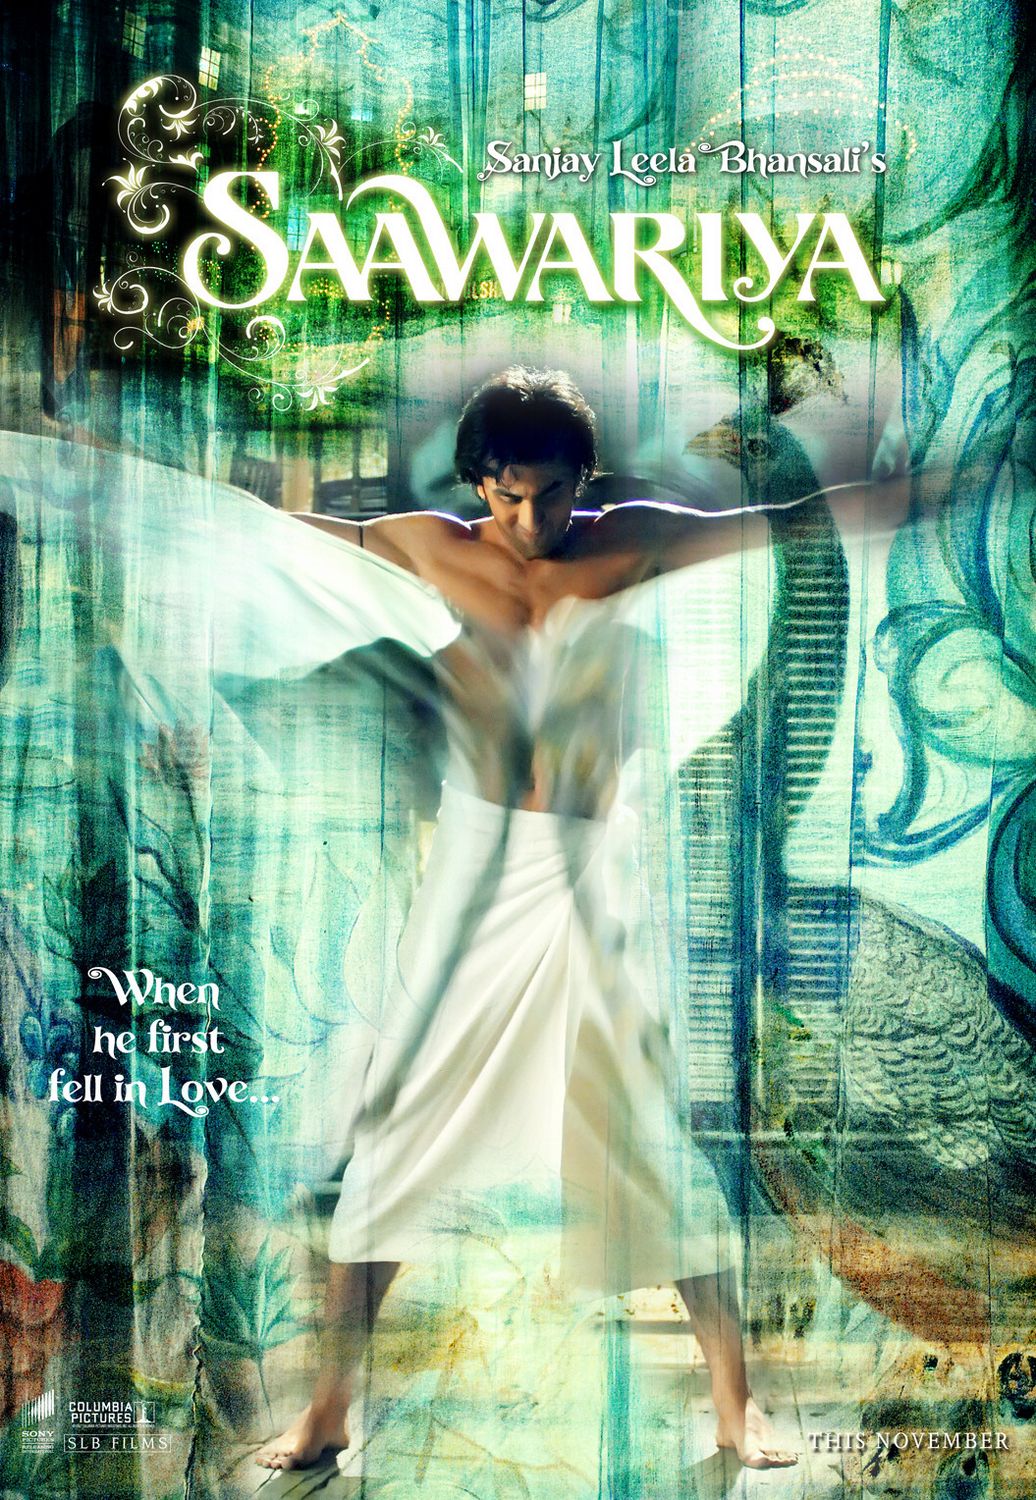 Extra Large Movie Poster Image for Saawariya (#2 of 3)